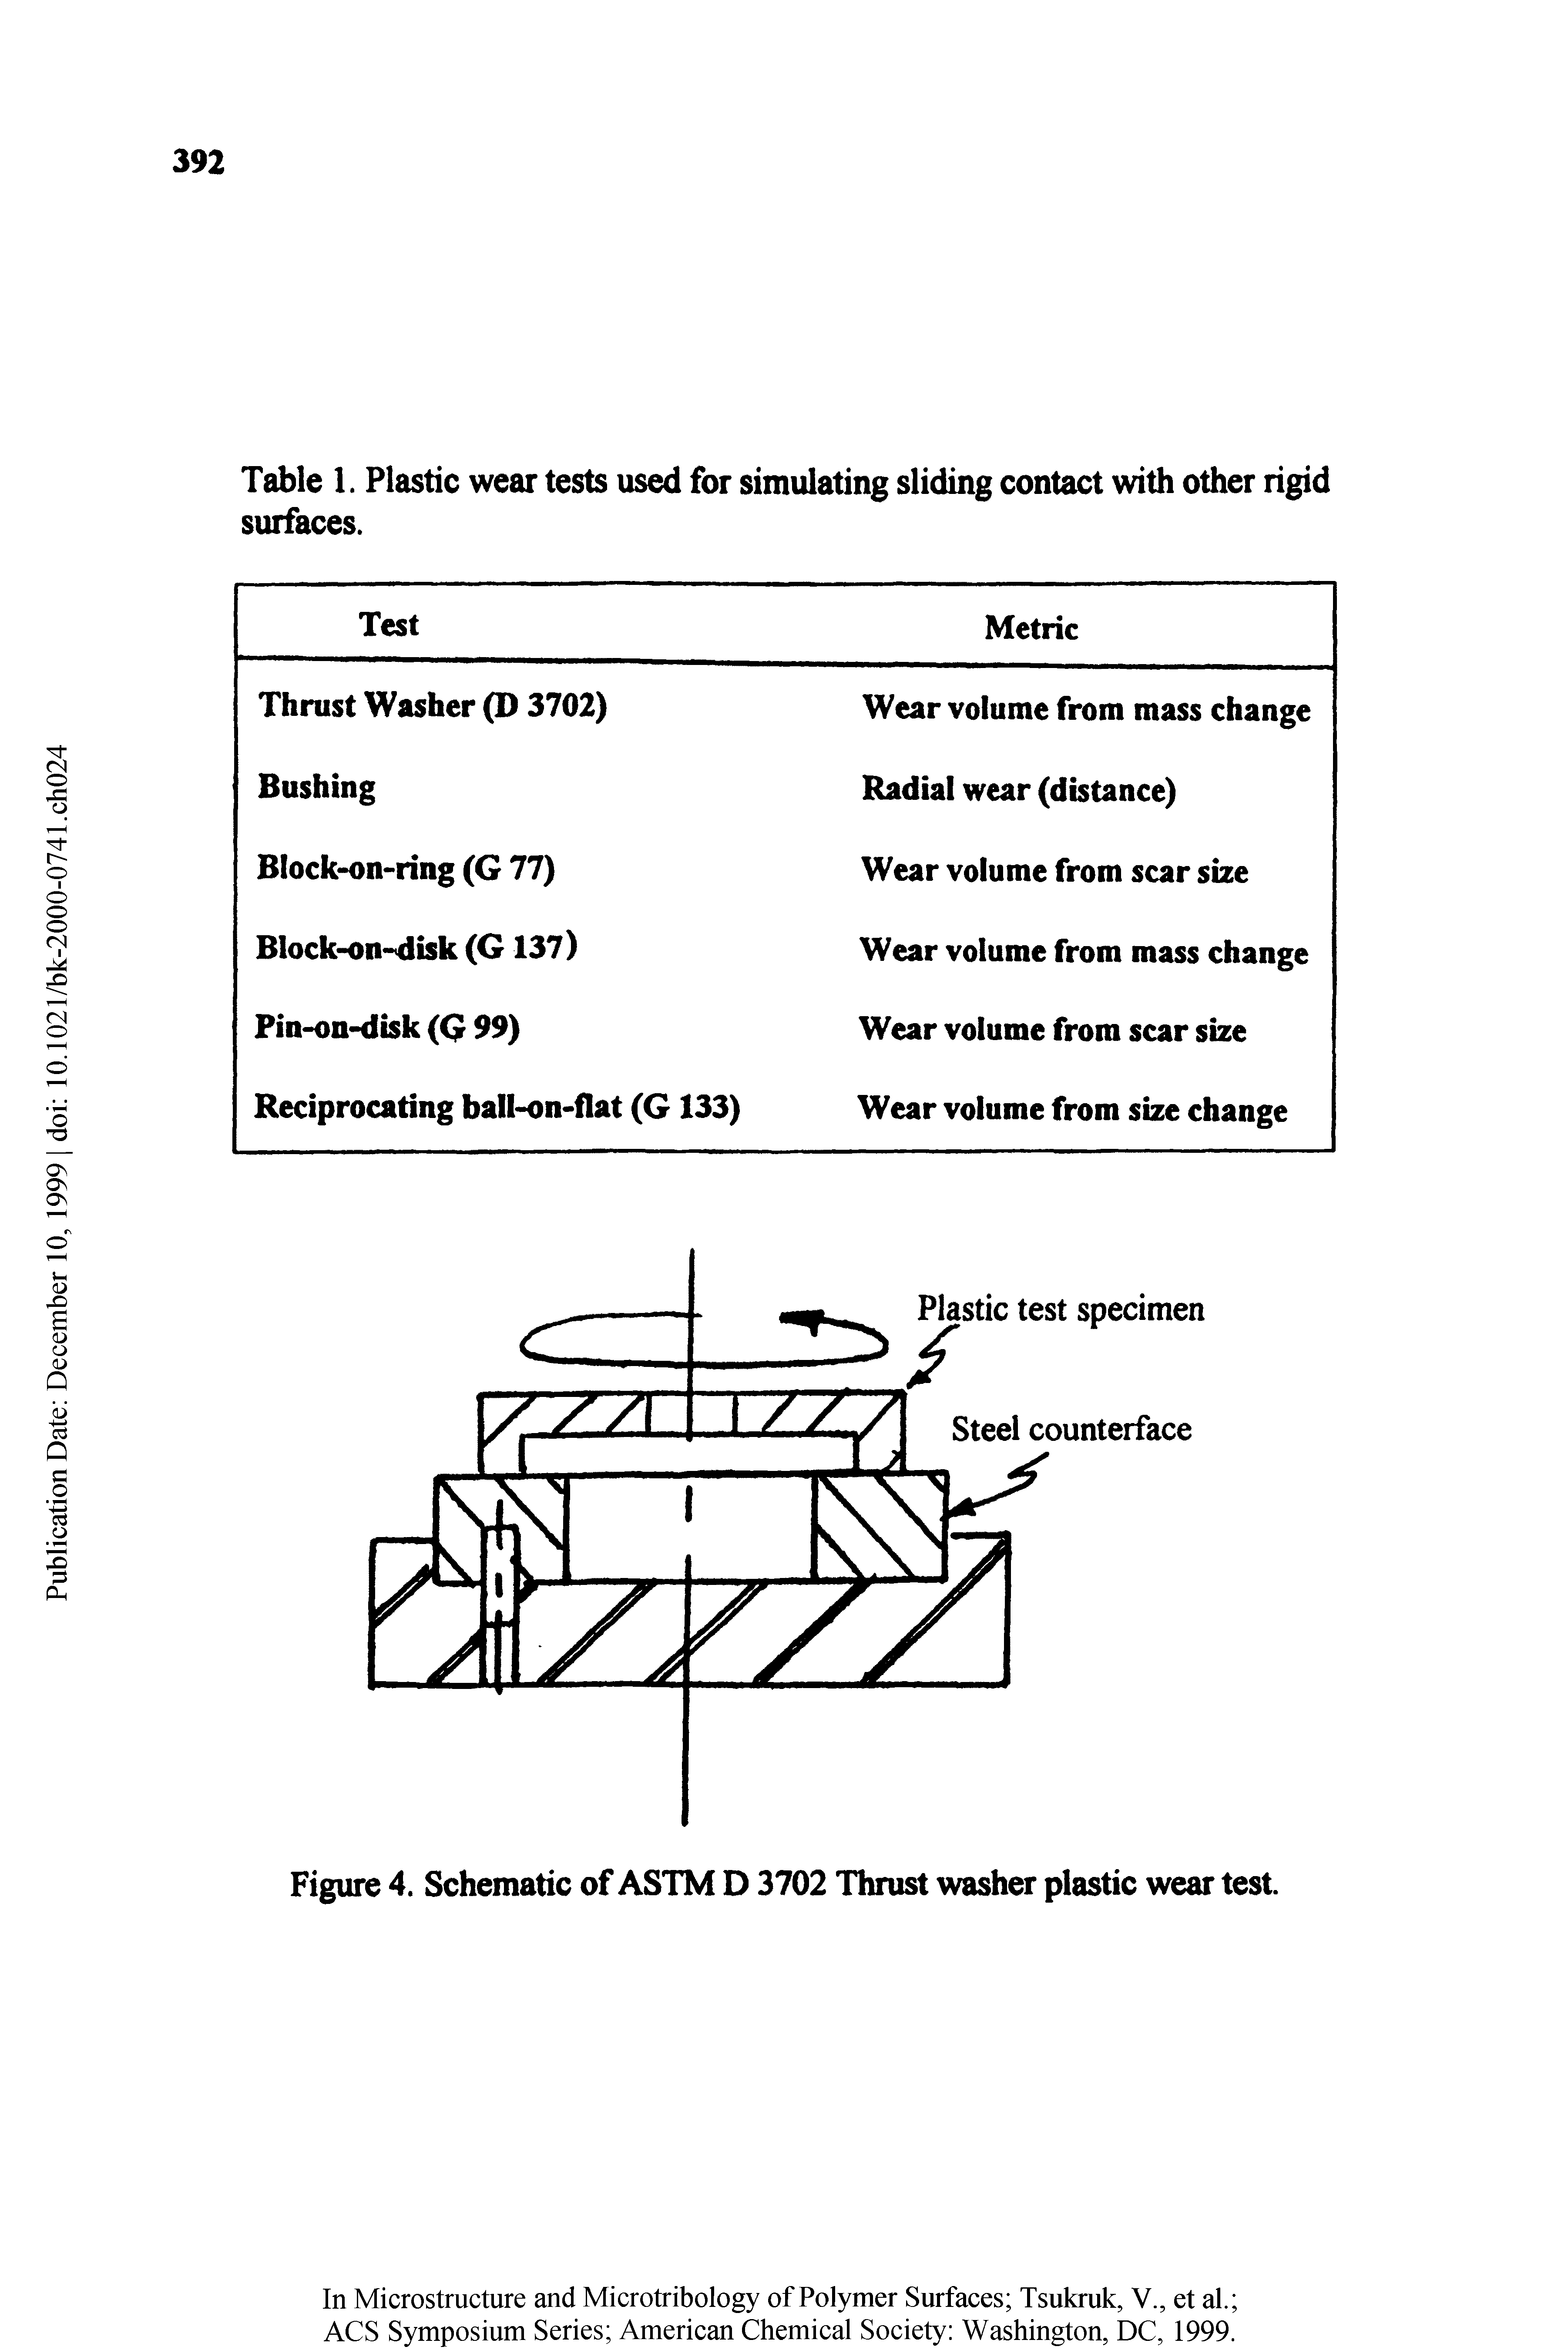 Figure 4. Schematic of ASTM D 3702 Thrust washer plastic wear test.